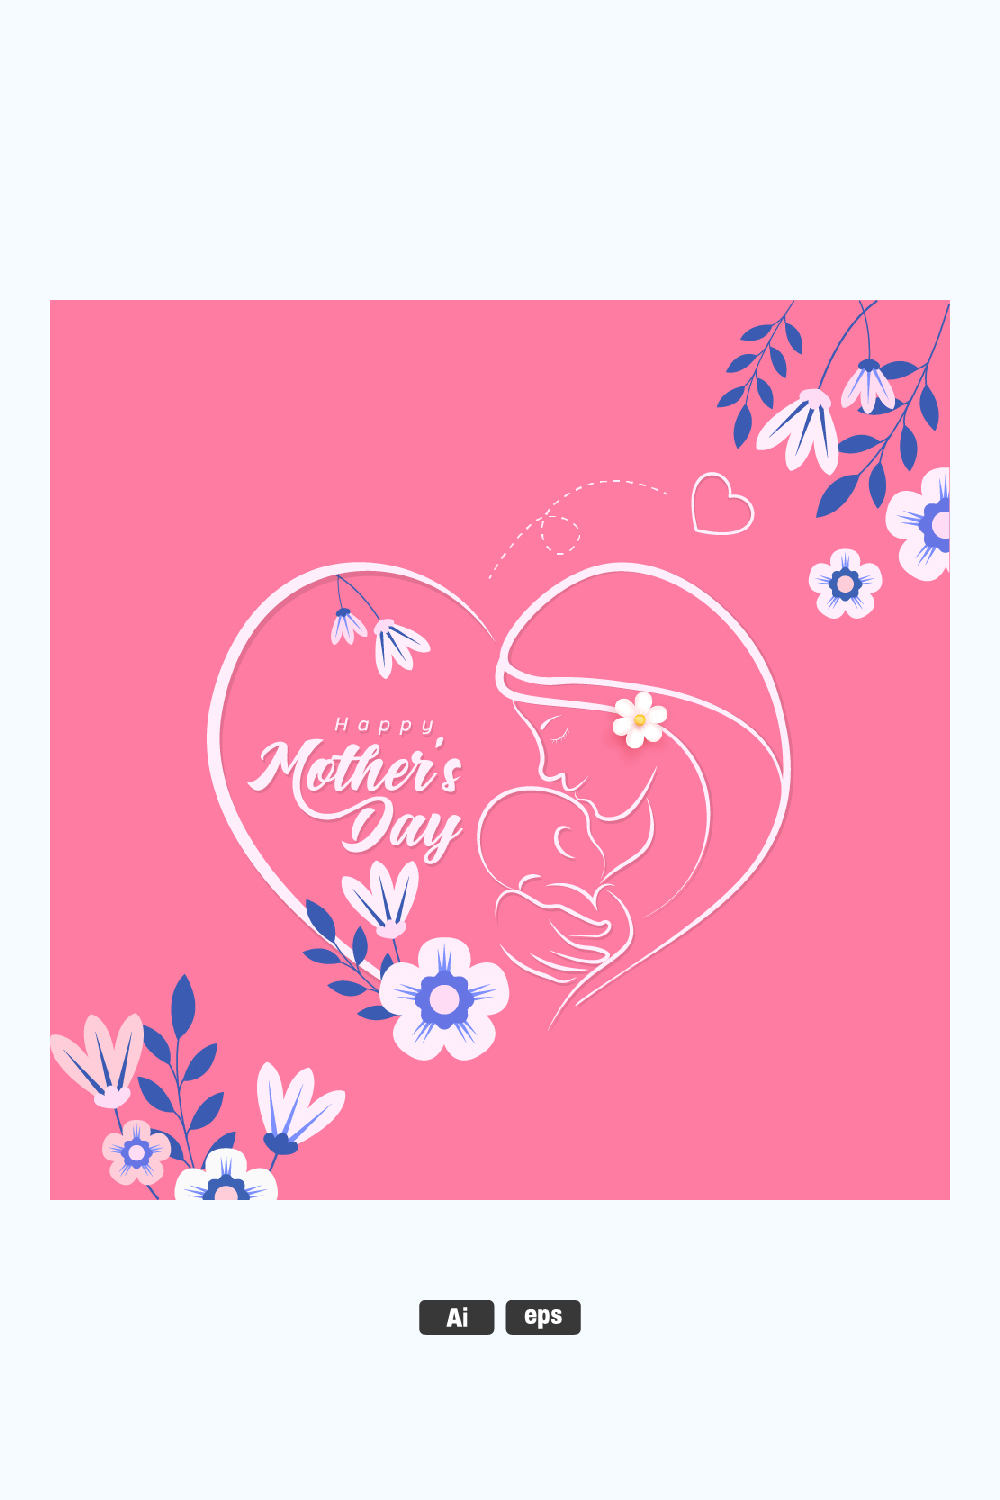 Mother's Days social media banner pinterest preview image.